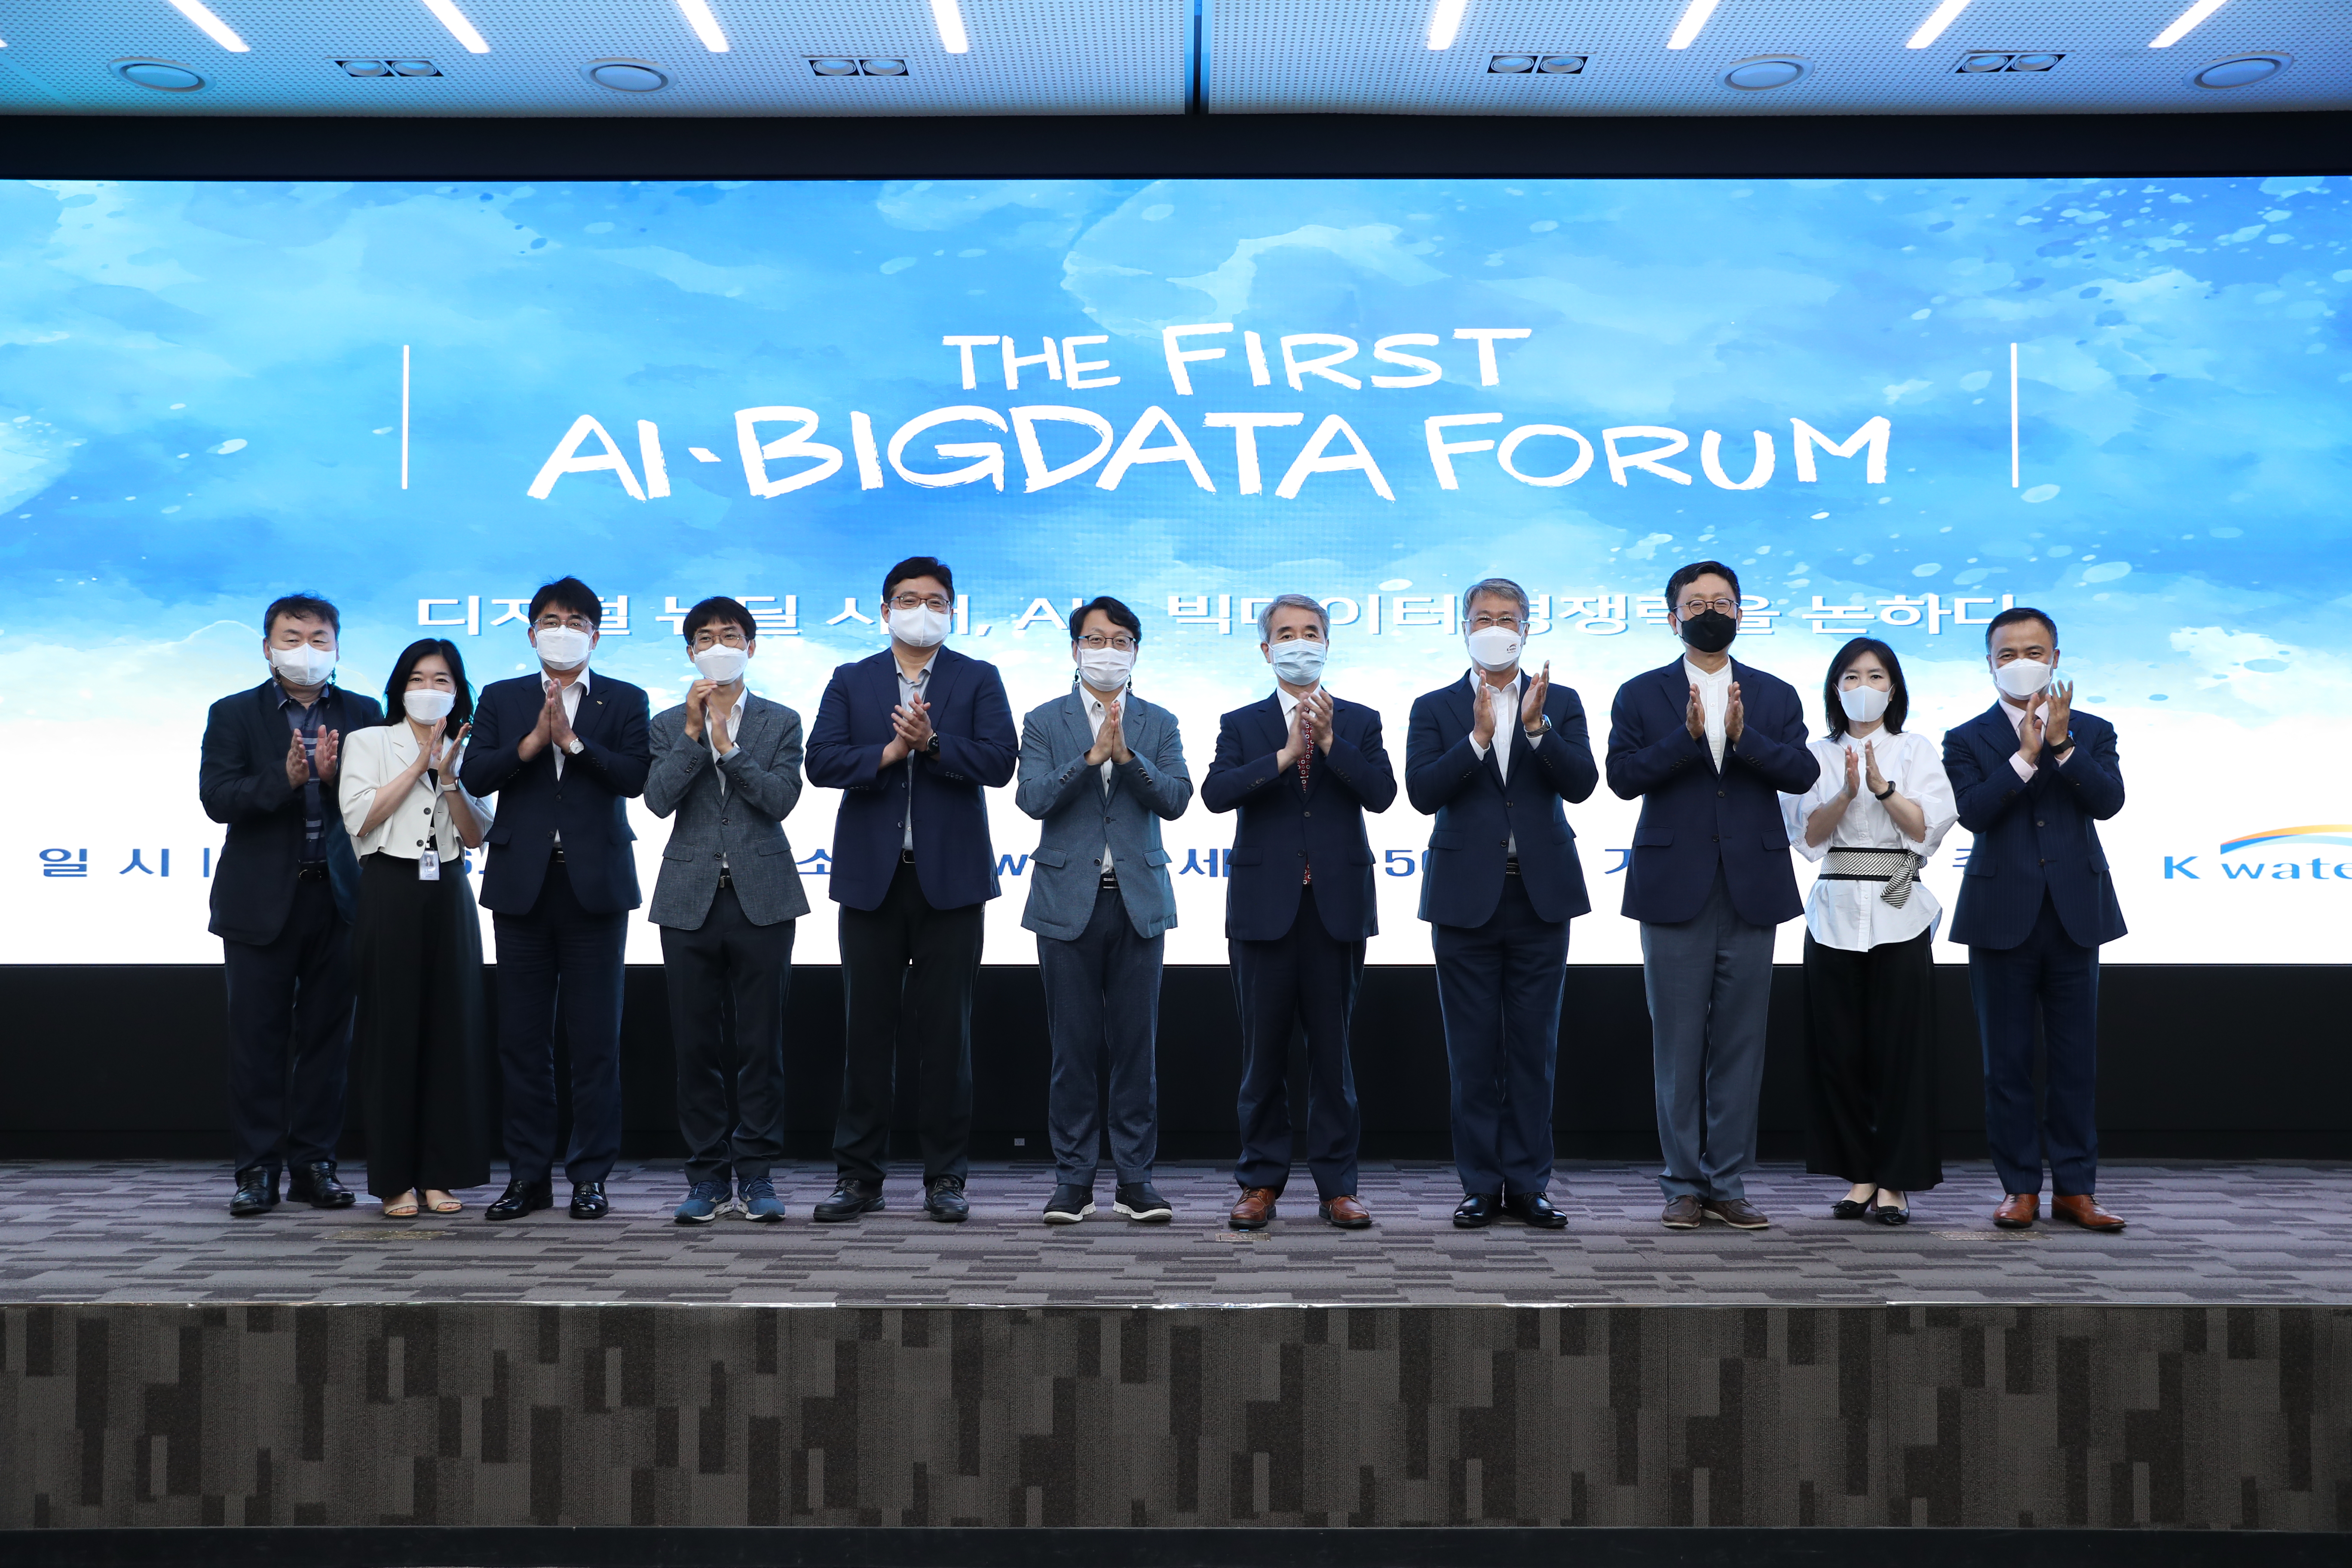 AI Big Data Forum 